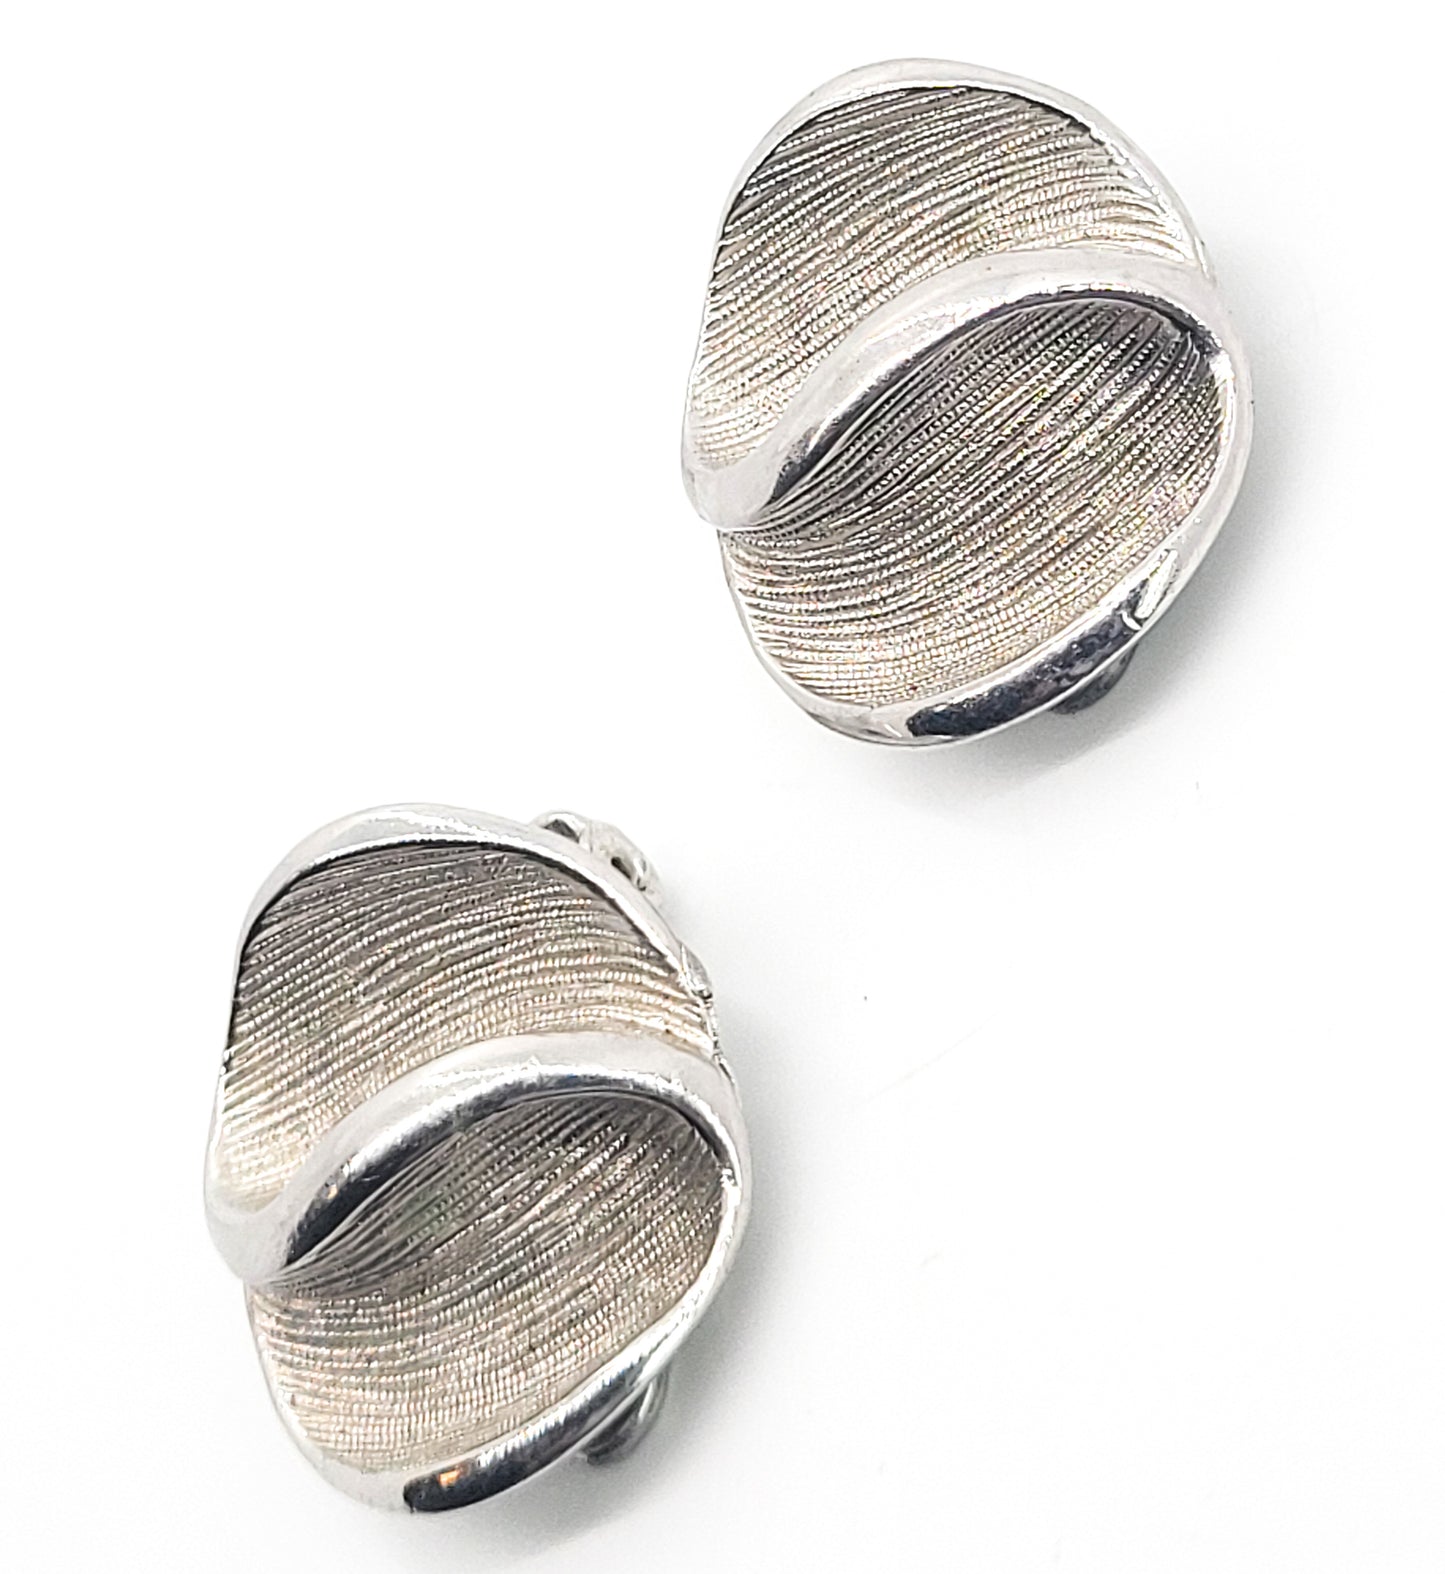 Kramer brushed silver toned swirled modernist vintage clip on earrings